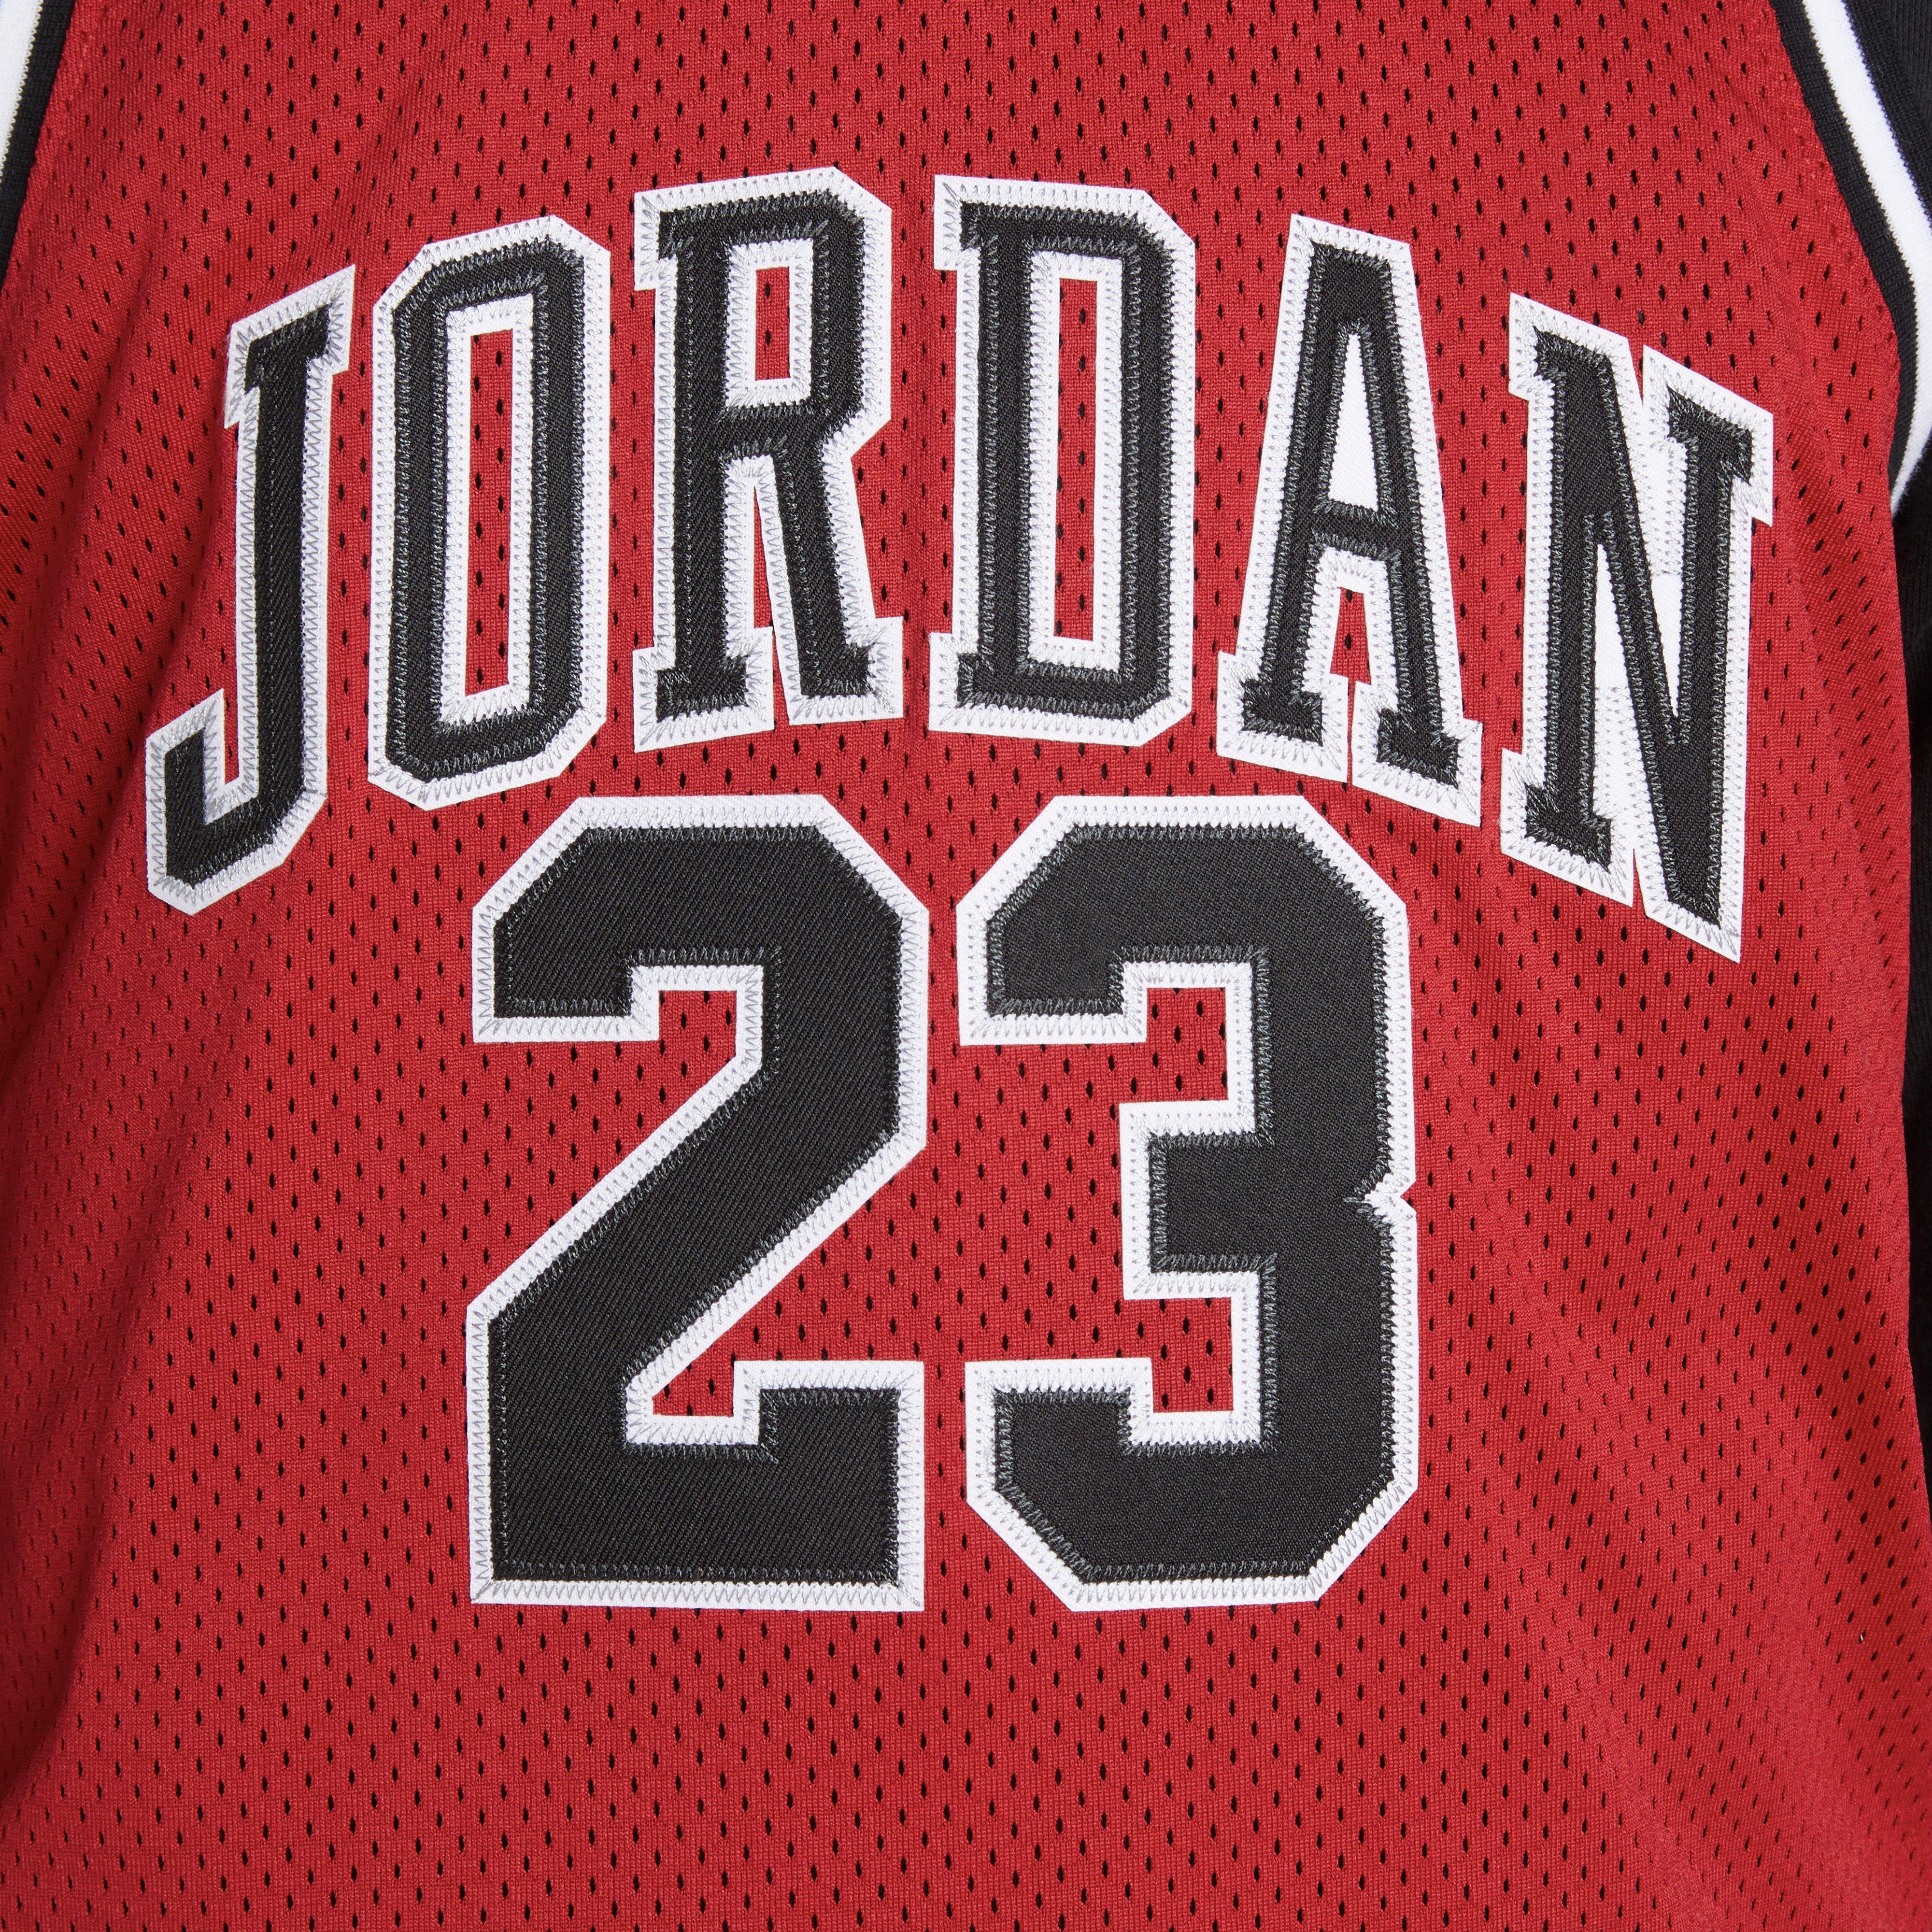 Jordan 23 Striped Jersey Big Kids Top.